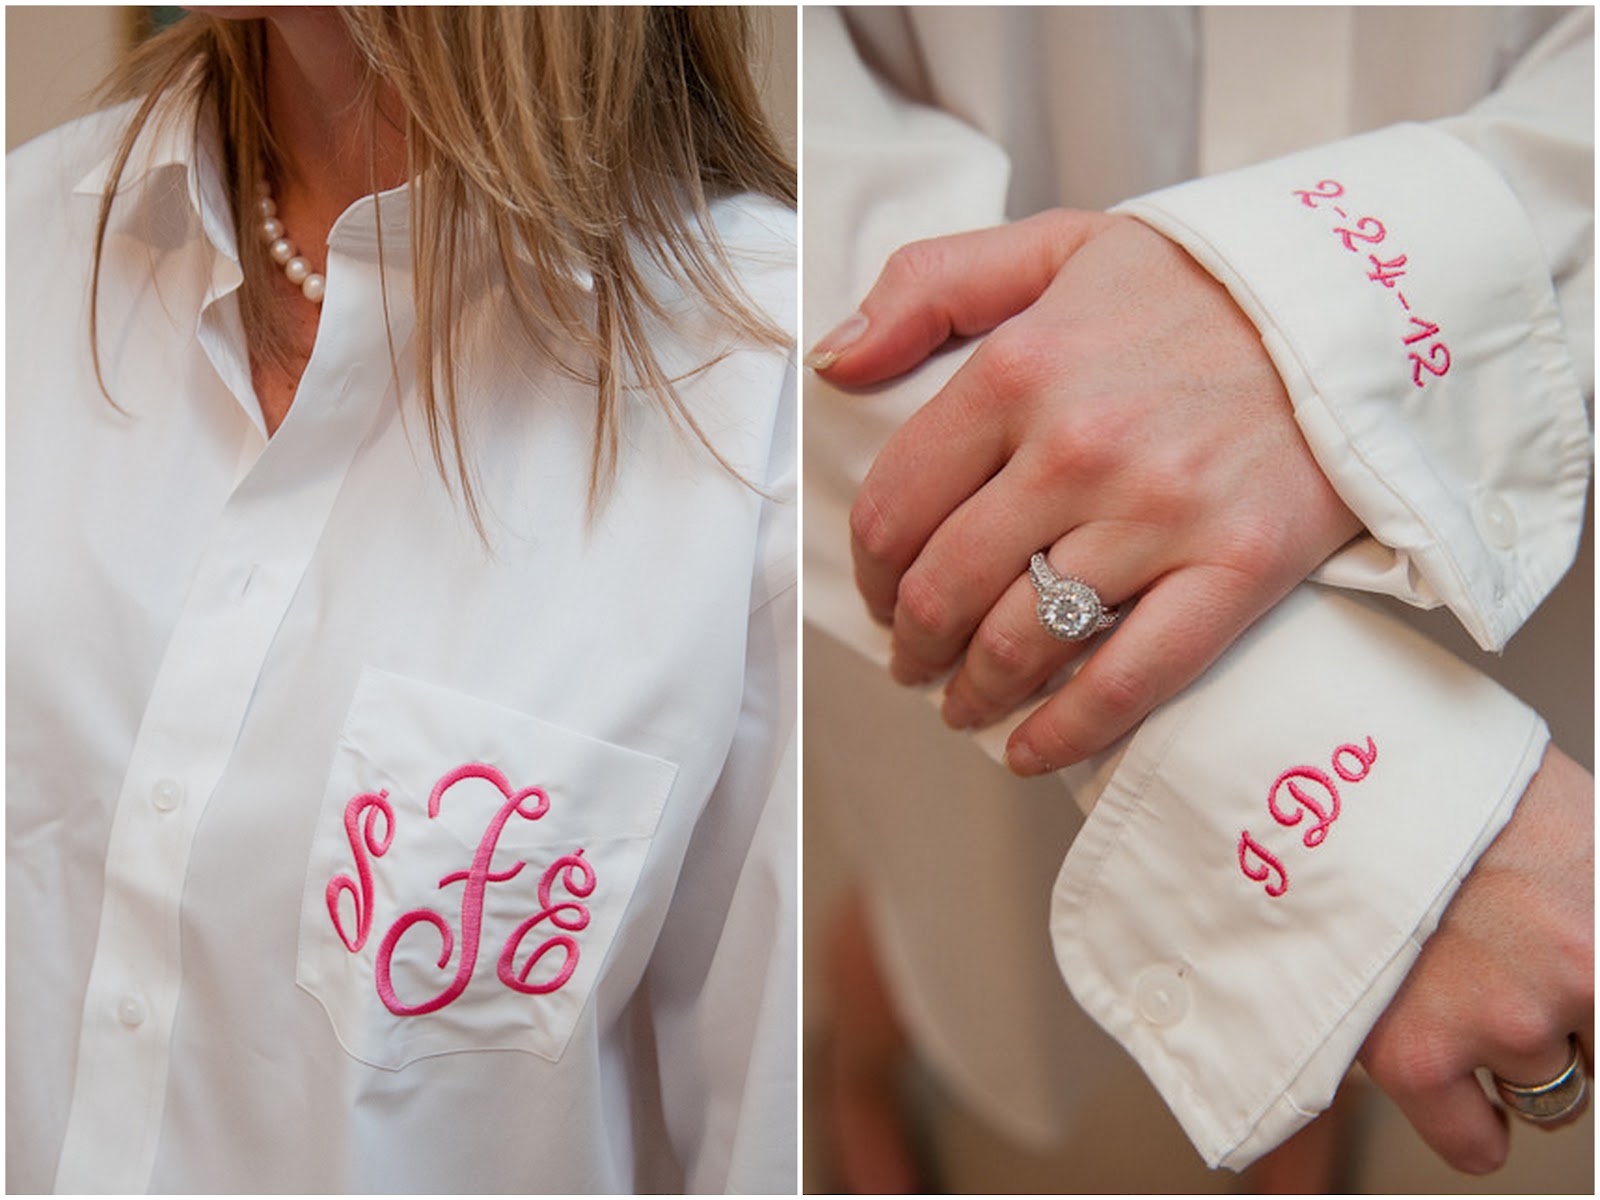 Wedding Wednesday - Southern Aisle Monogrammed Bridesmaids Shirts